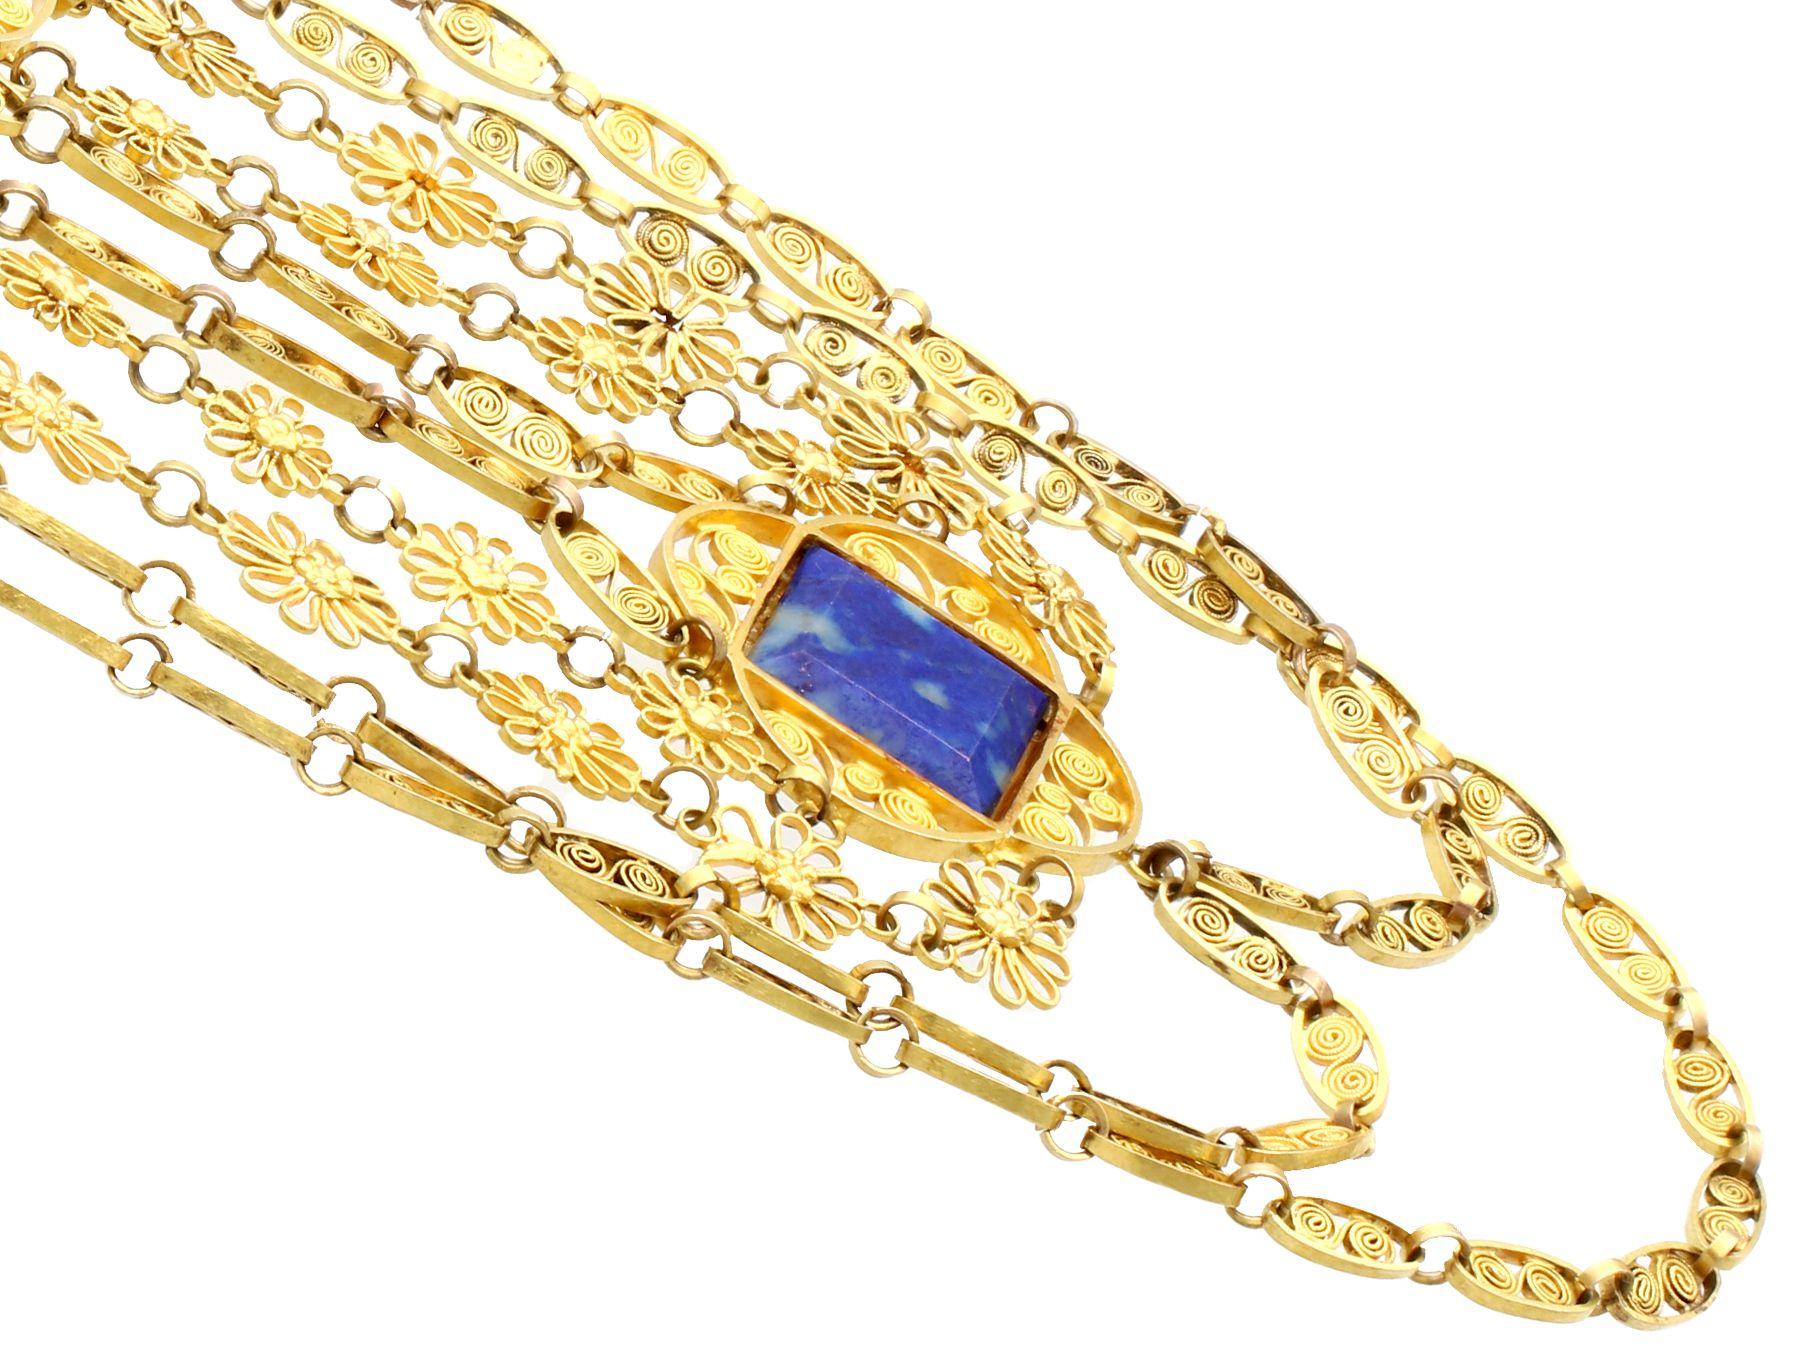 Square Cut Antique Victorian 5.55 Carat Lapis Lazuli Yellow Gold Necklace For Sale